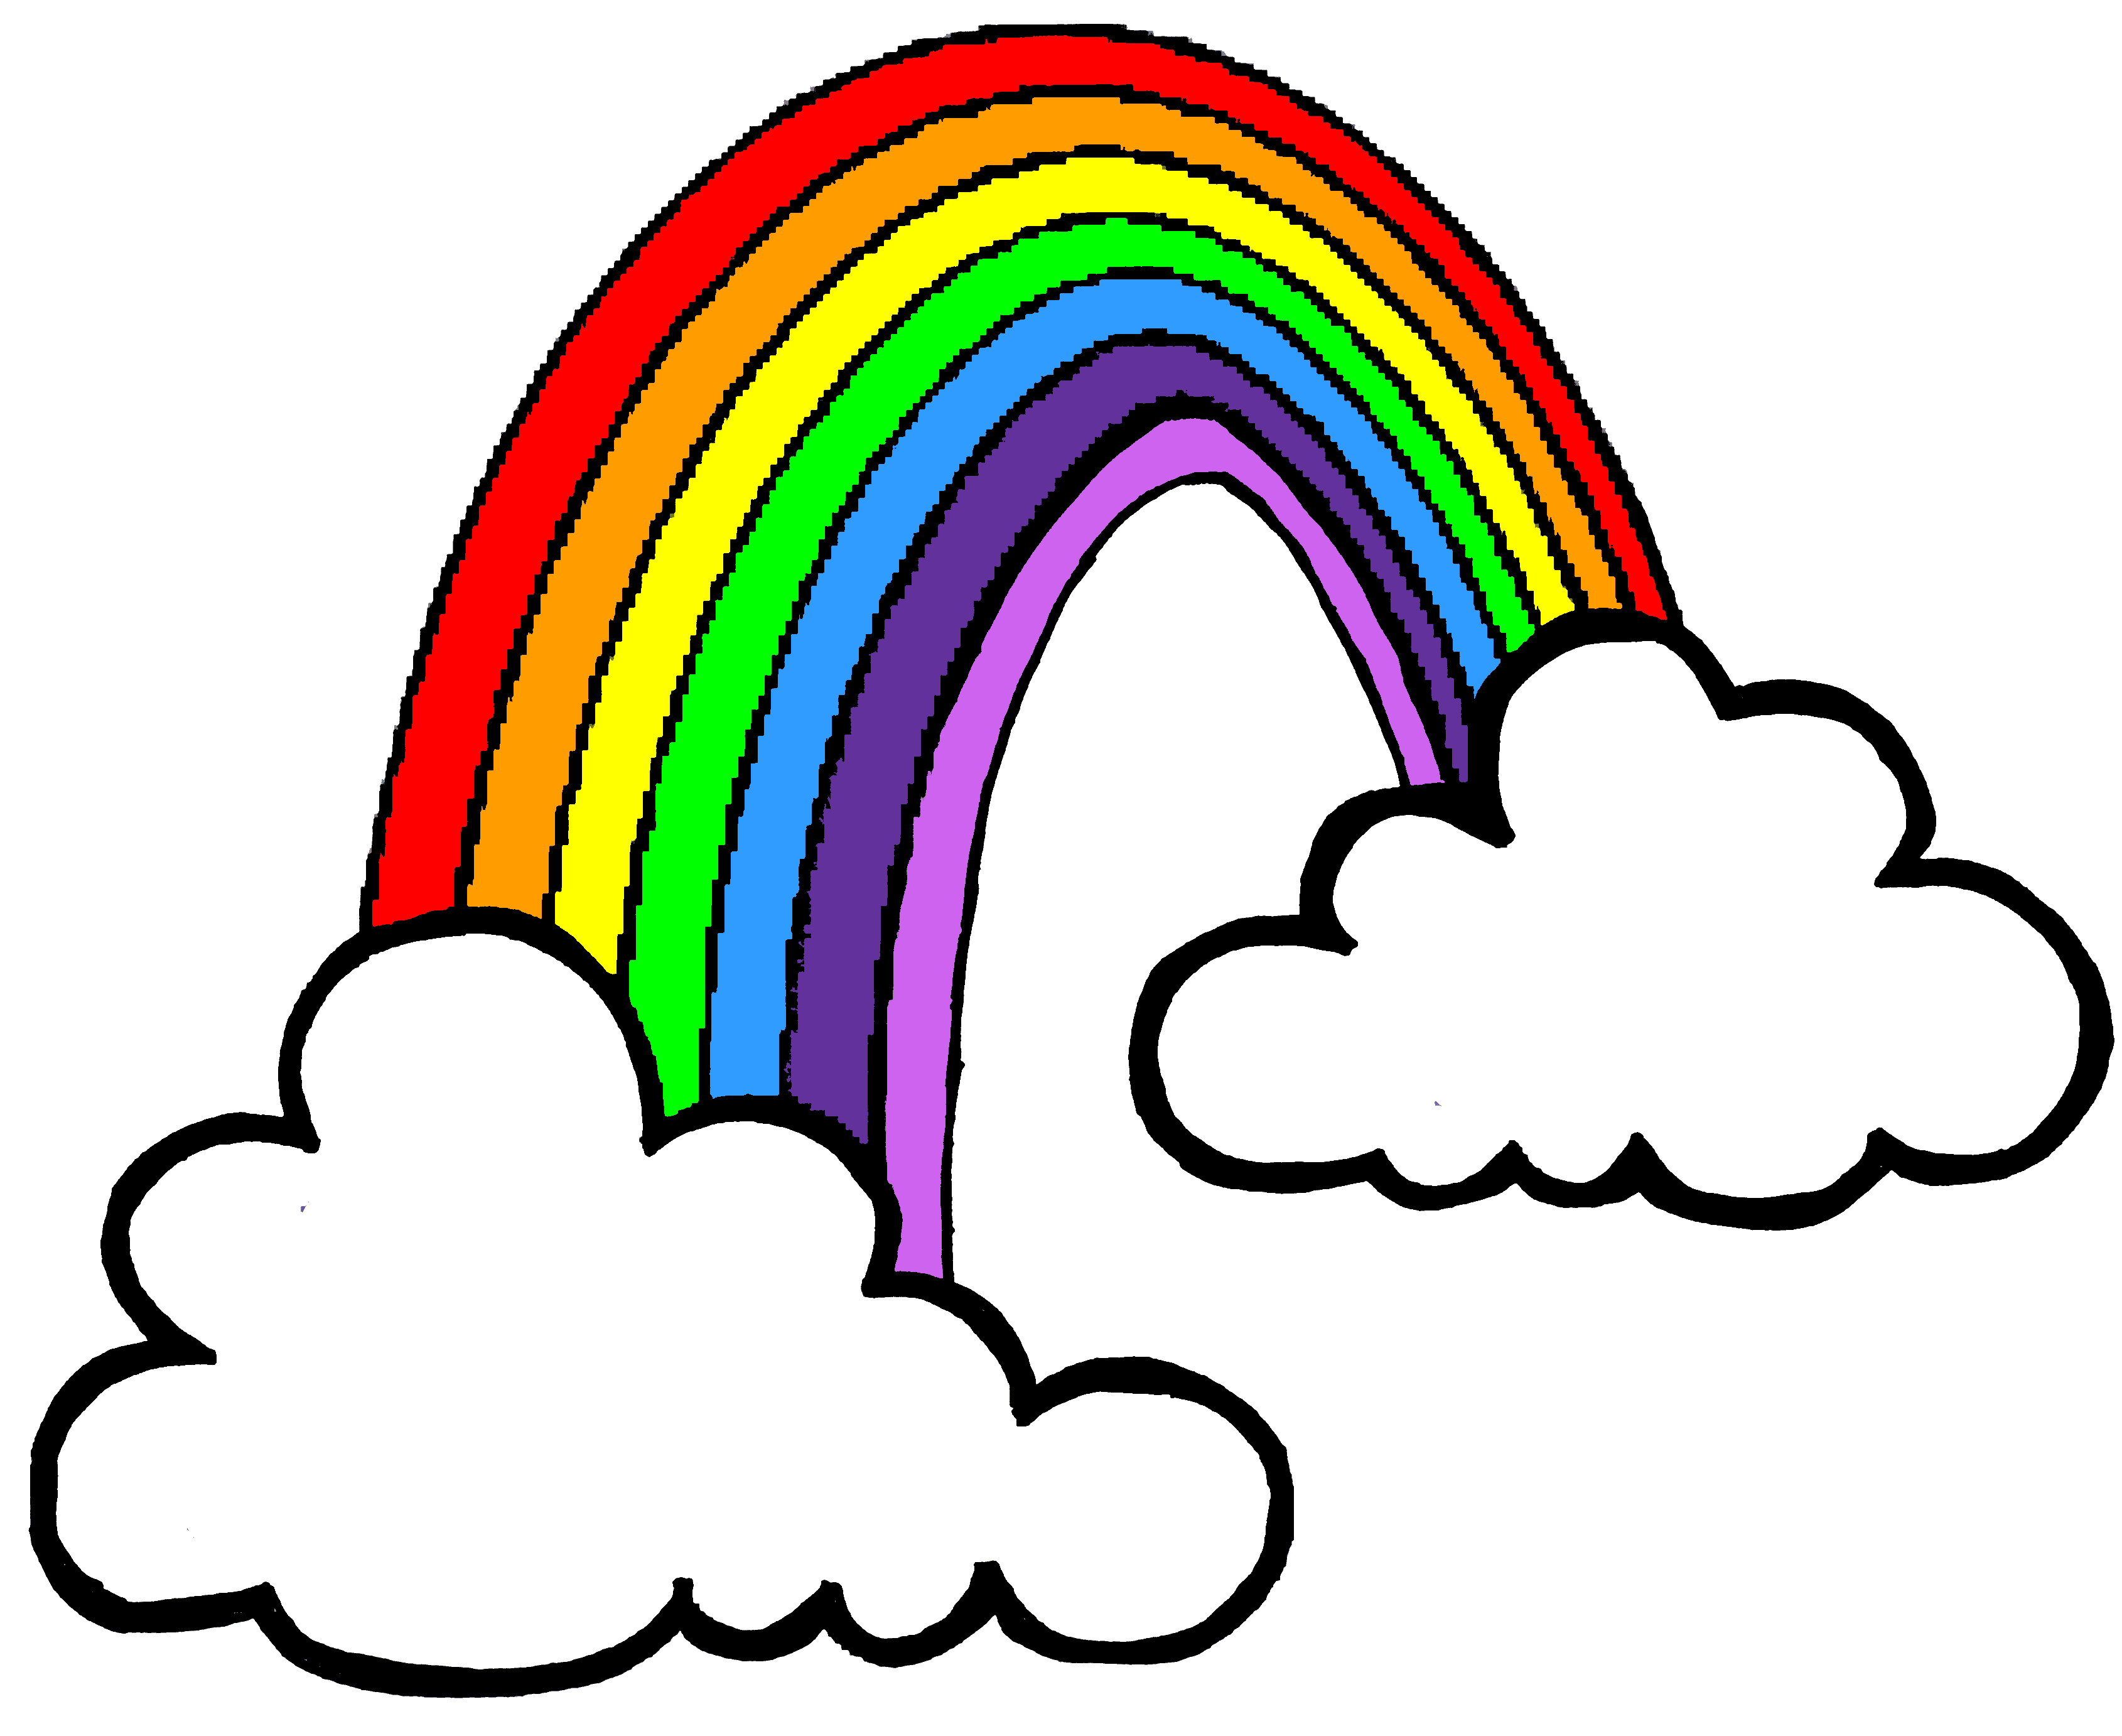 Free Cartoon Rainbows, Download Free Cartoon Rainbows png images, Free